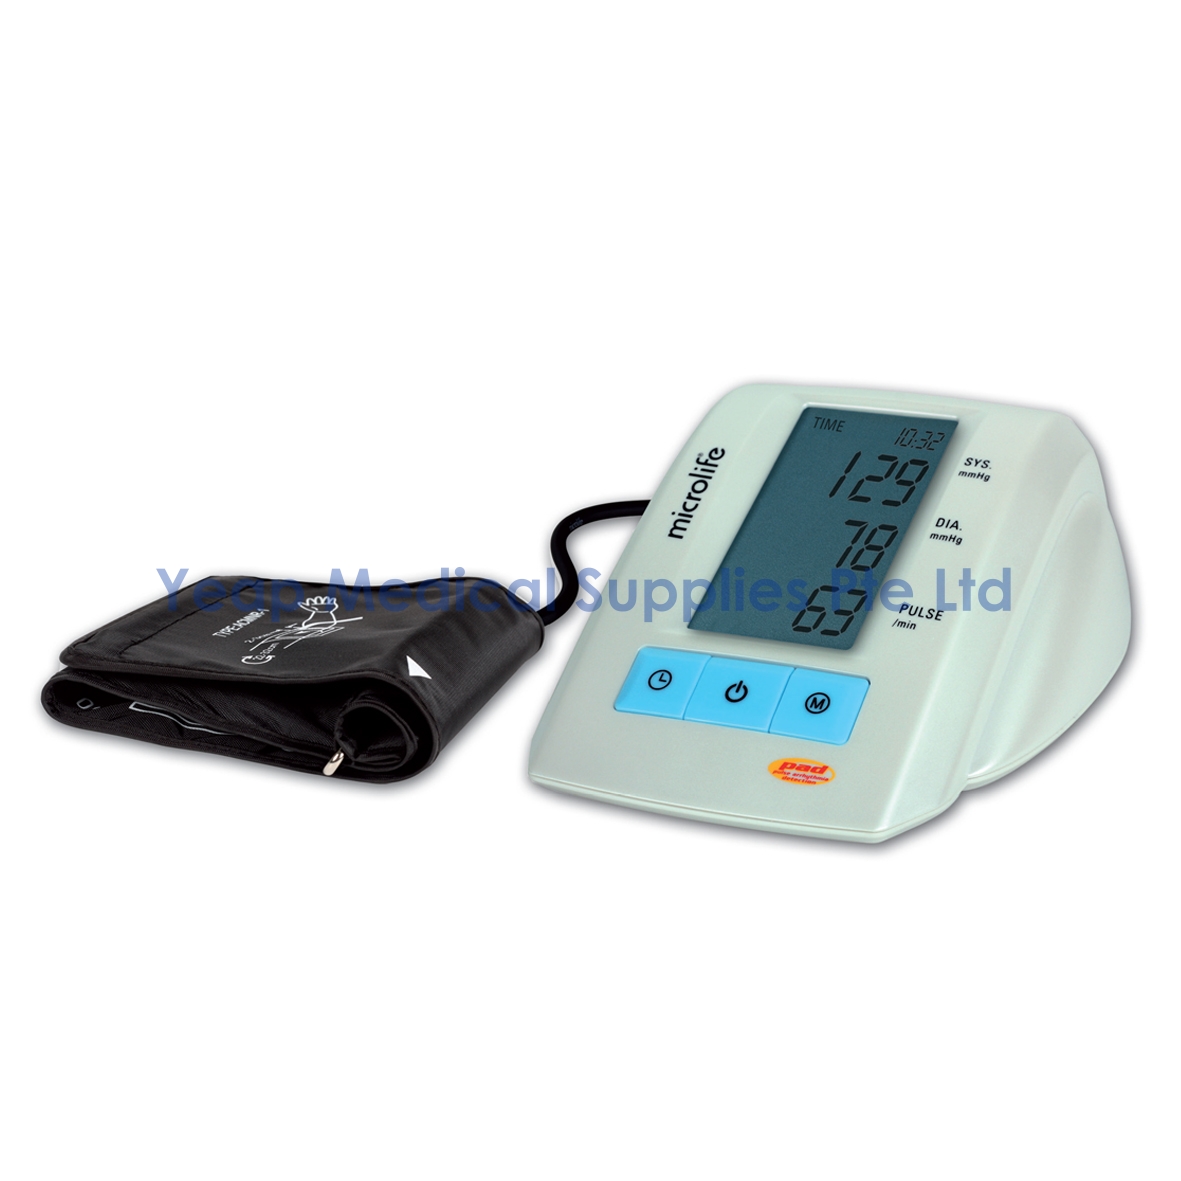 Microlife Automatic Blood Pressure Monitor